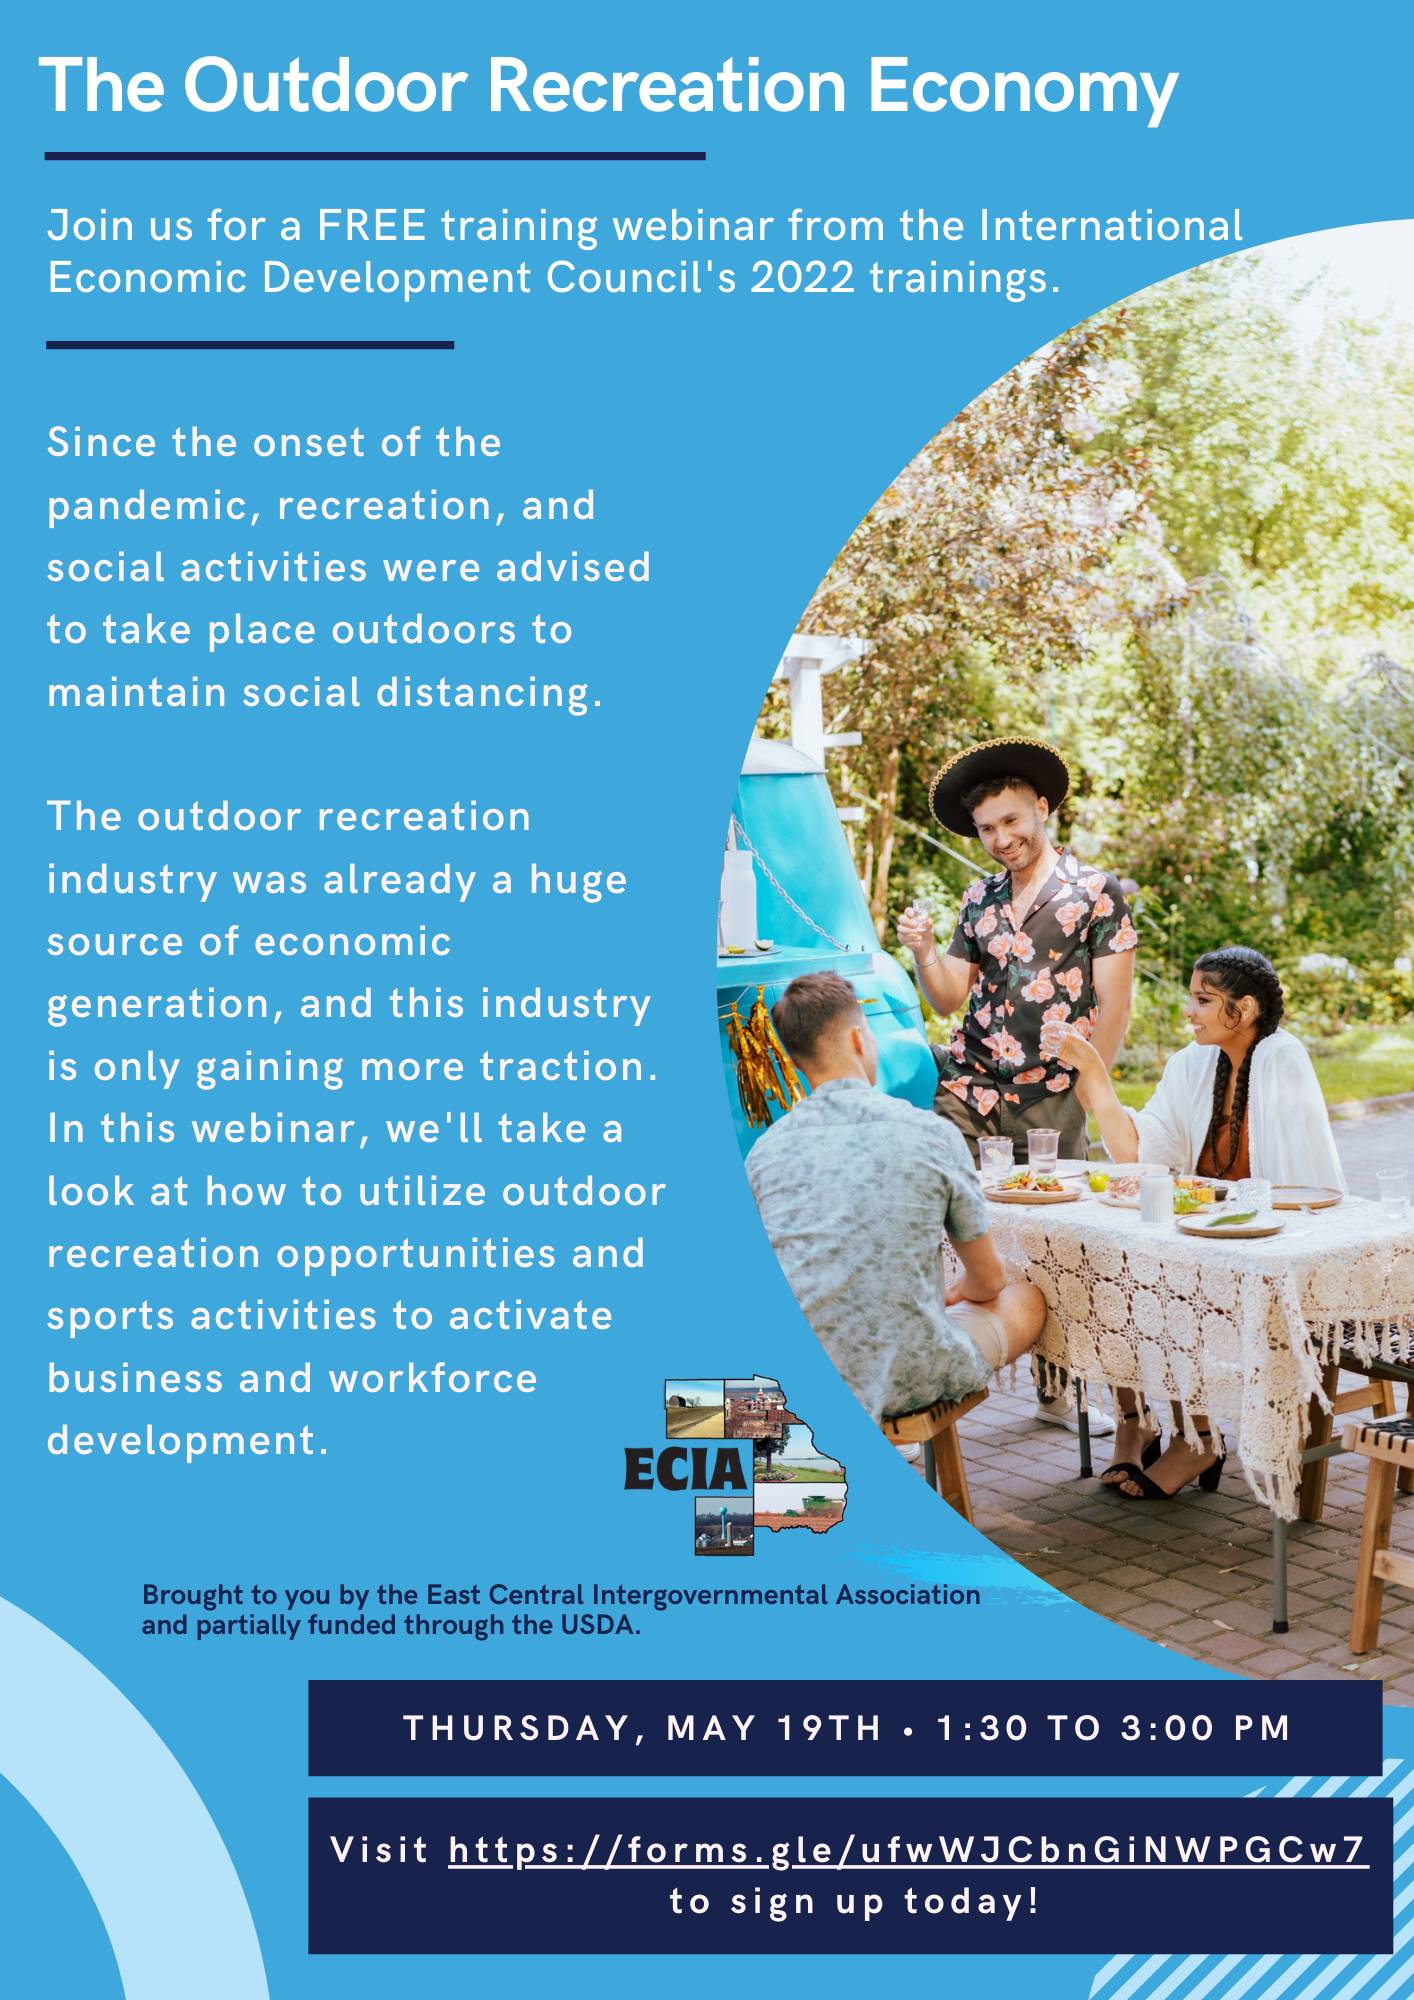 The Outdoor Recreation Economy IEDC Webinar Flyer 5-19-22  - Copy